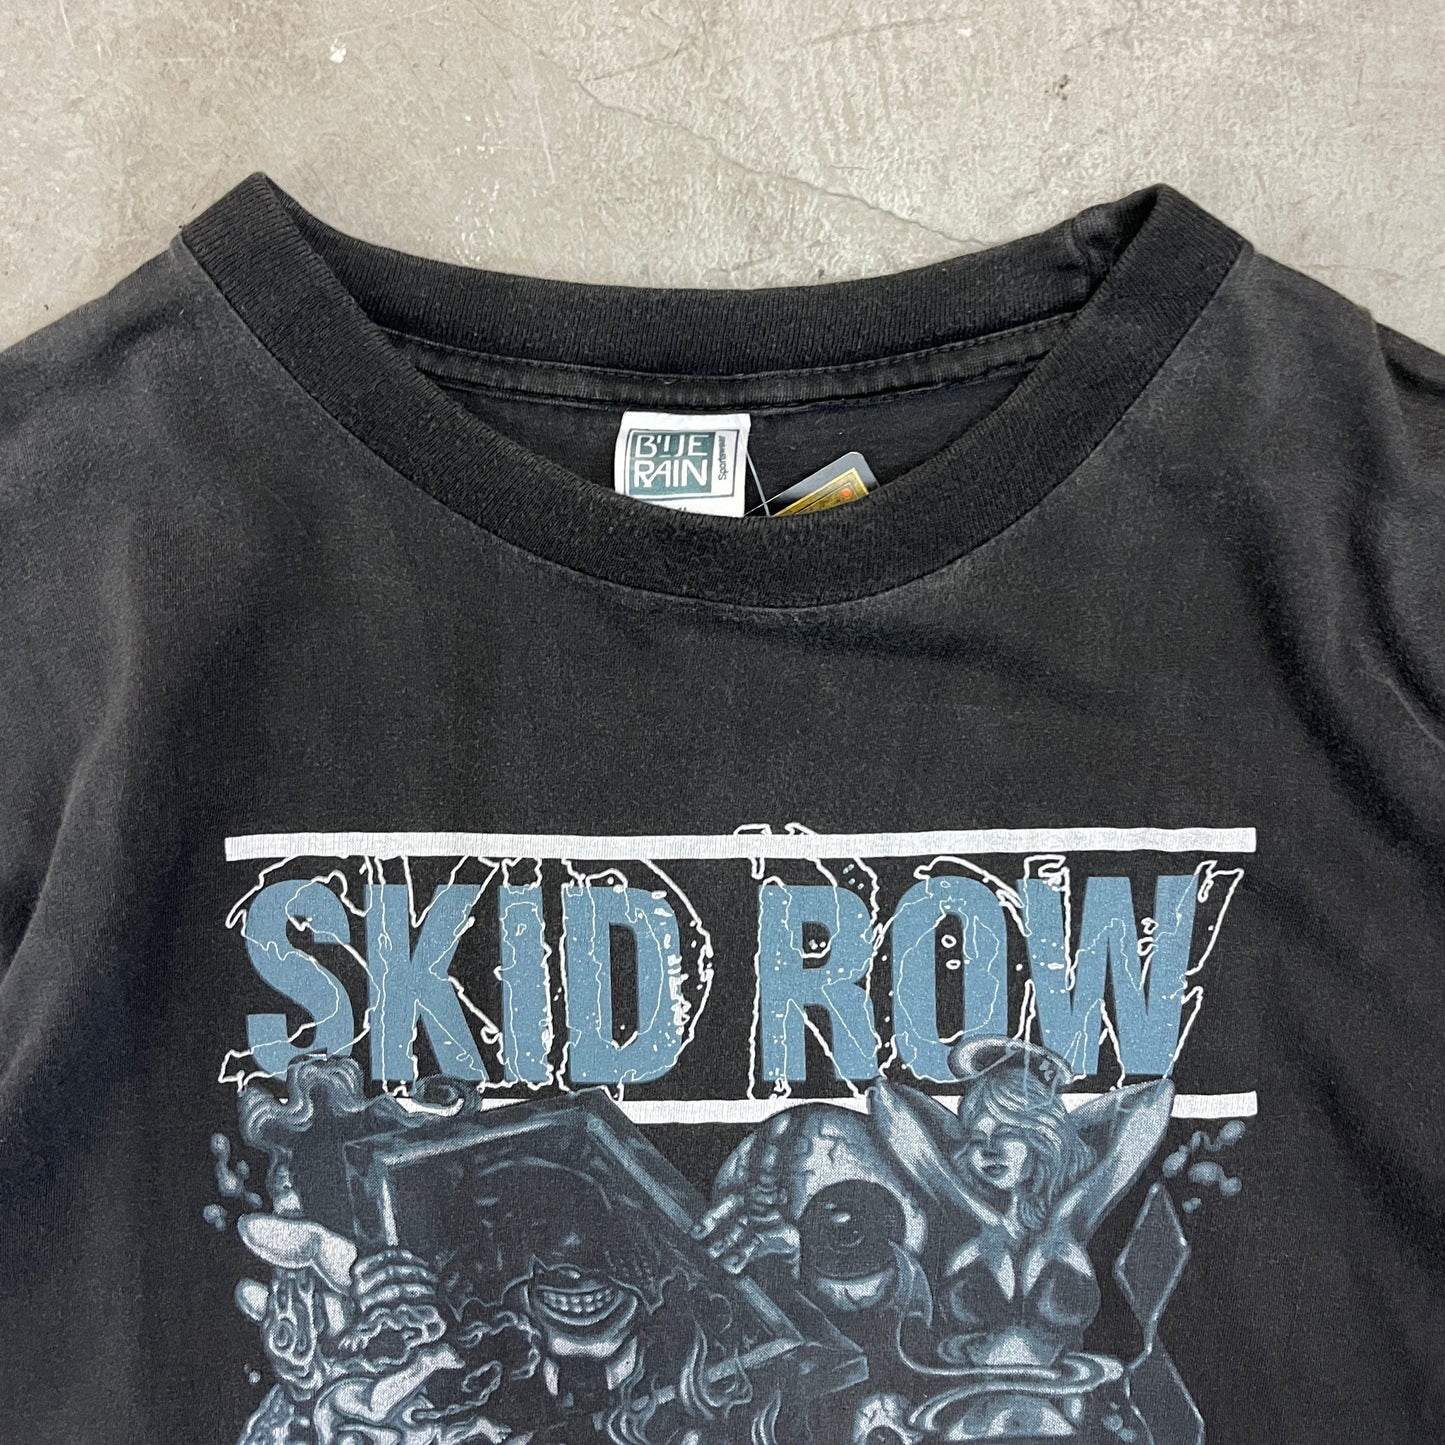 SKID ROW SUB HUMAN RACE 1995 [XL]